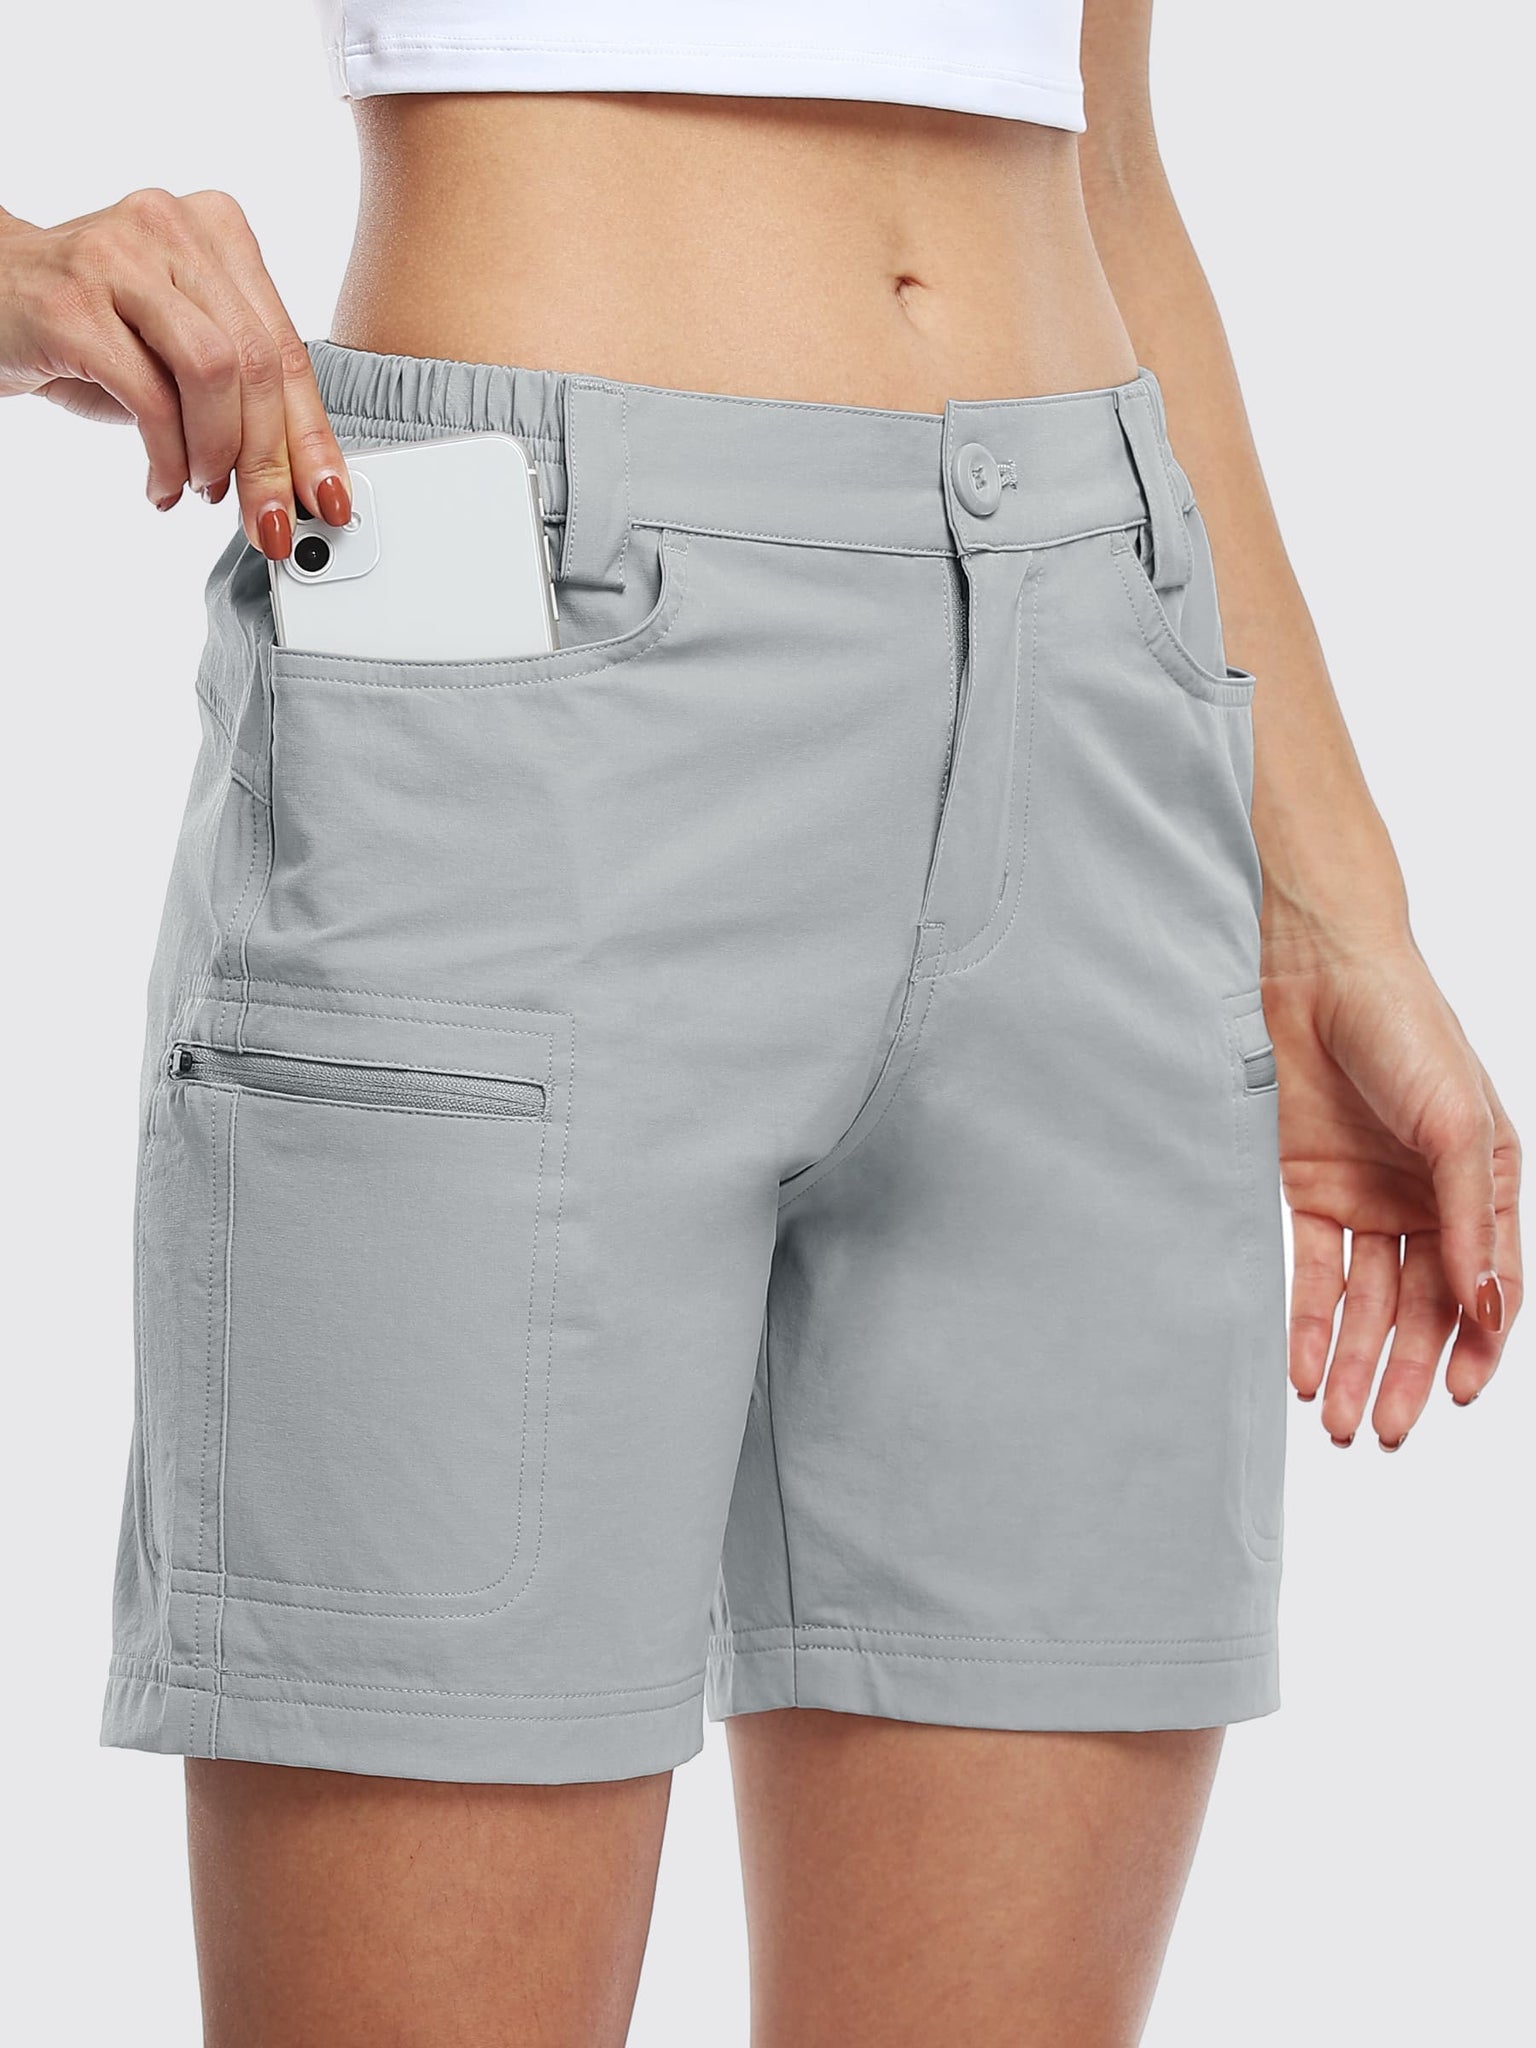 Willit Women's Outdoor Cargo Shorts 6 Inseam_LightGray_model3